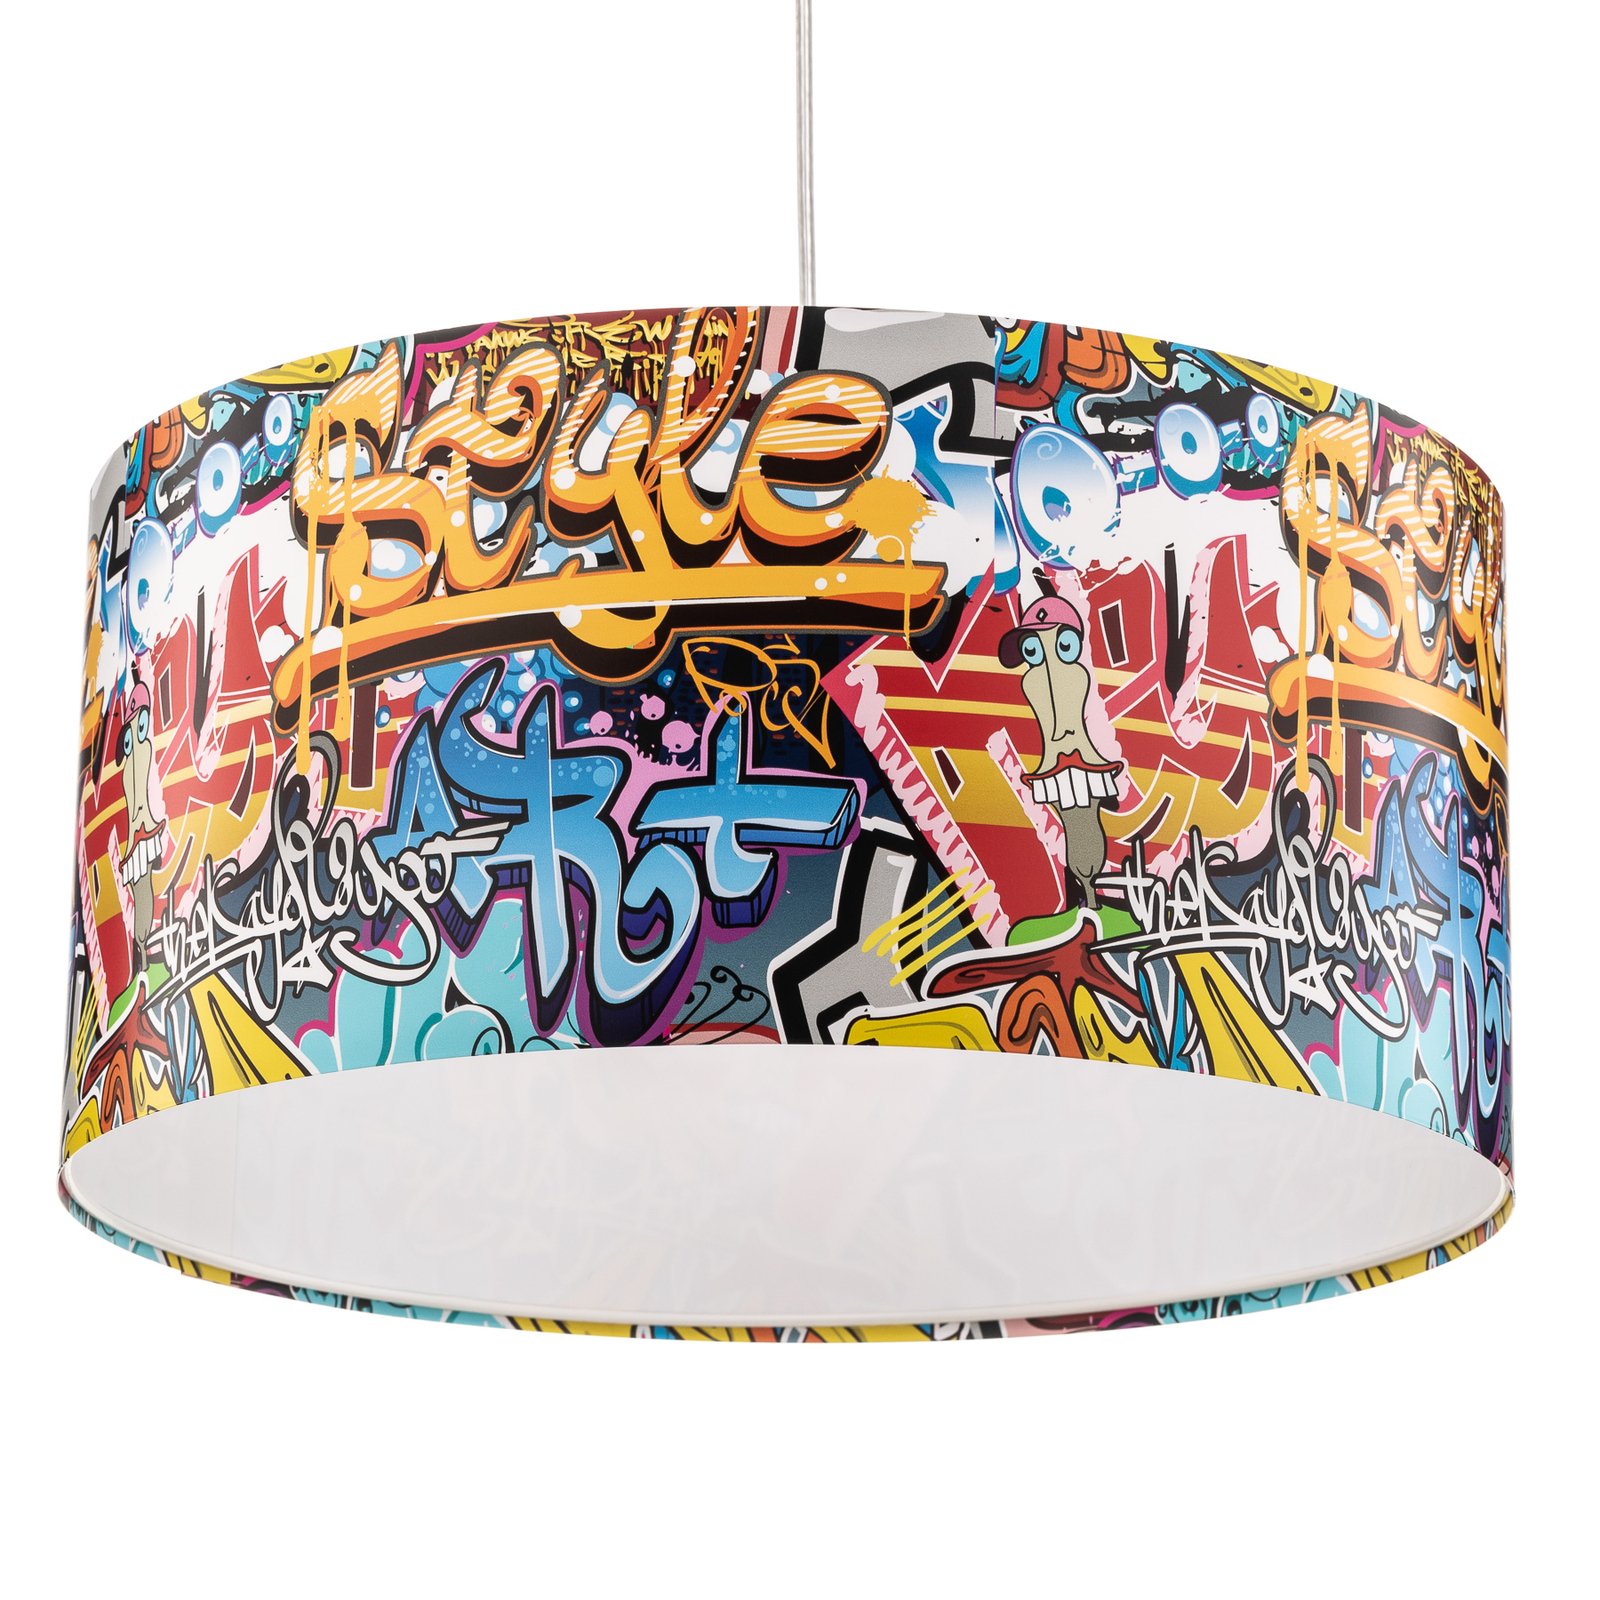 Lampa wisząca Graffiti z kolorowym nadrukiem foto